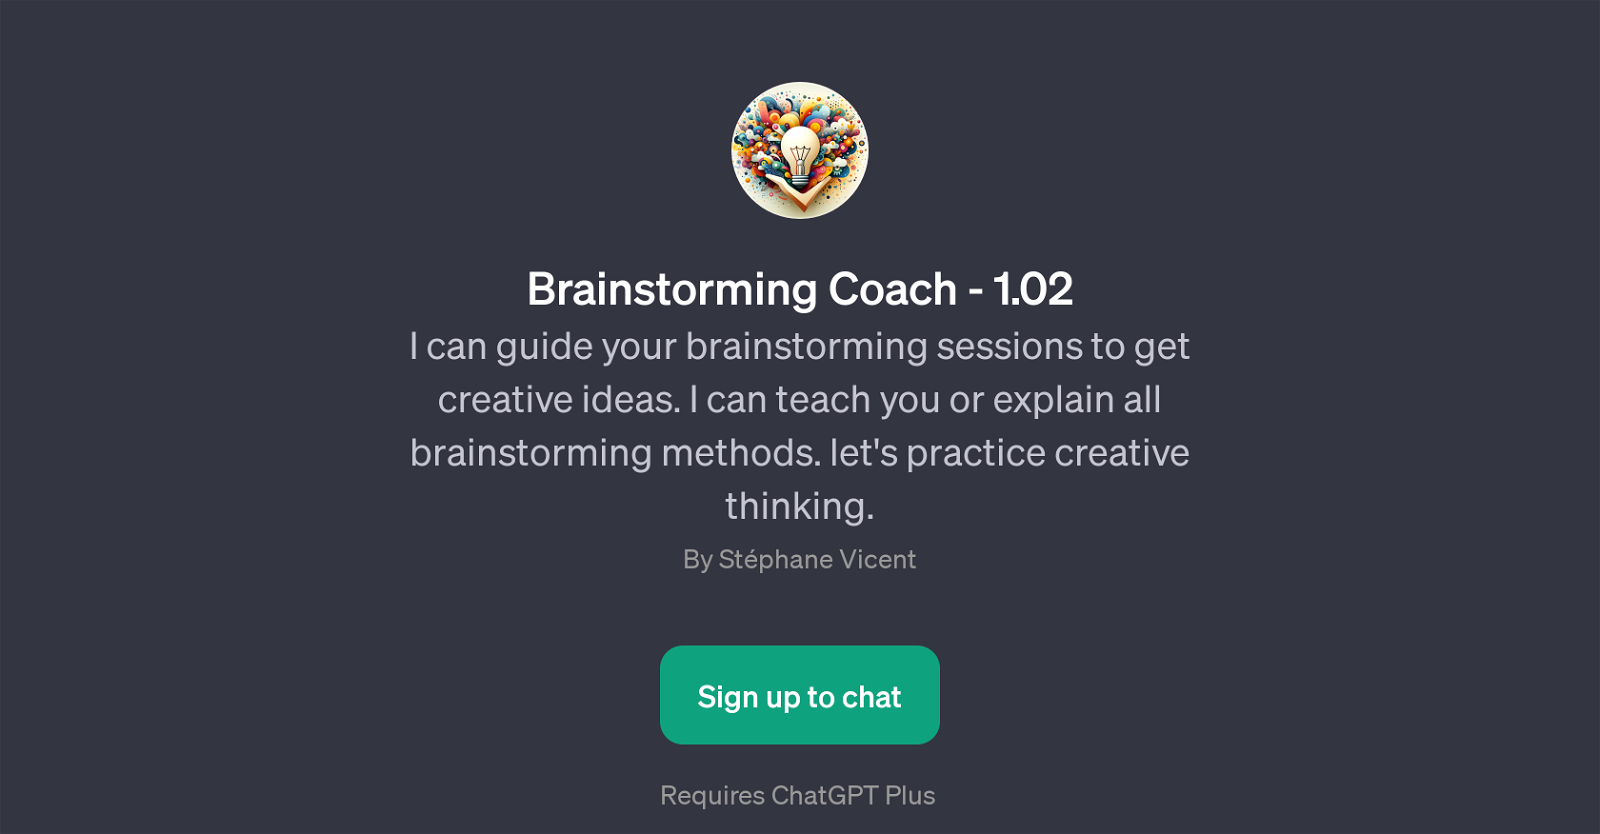 Brainstorming Coach - 1.02 website